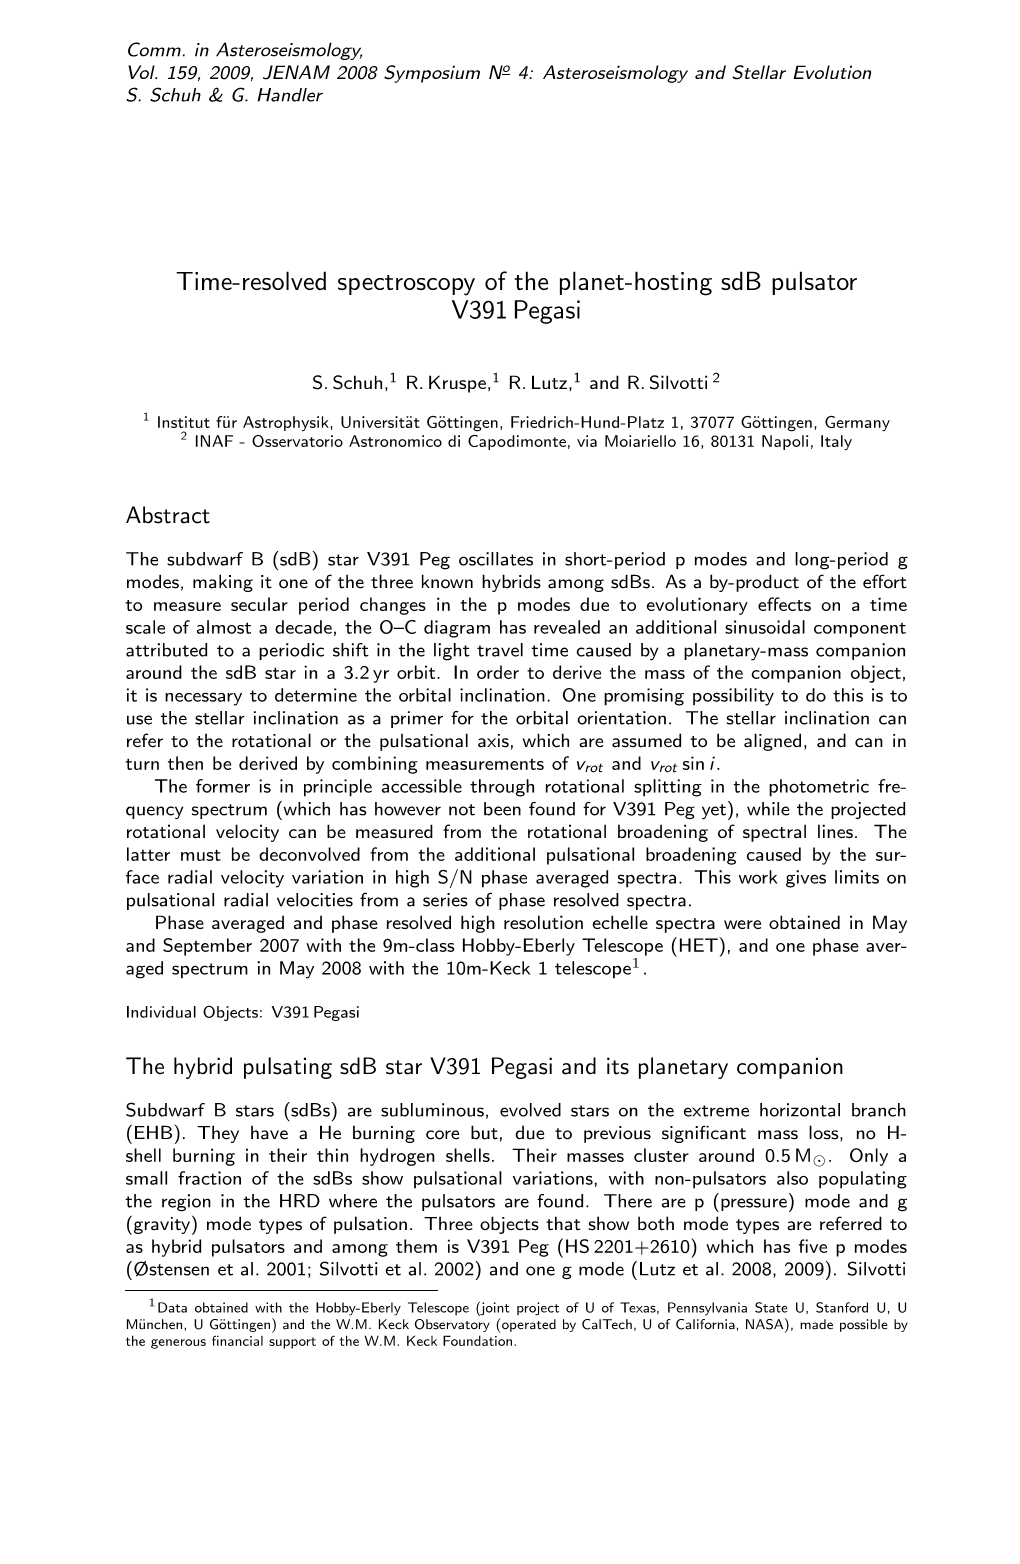 Time-Resolved Spectroscopy of the Planet-Hosting Sdb Pulsator V391 Pegasi